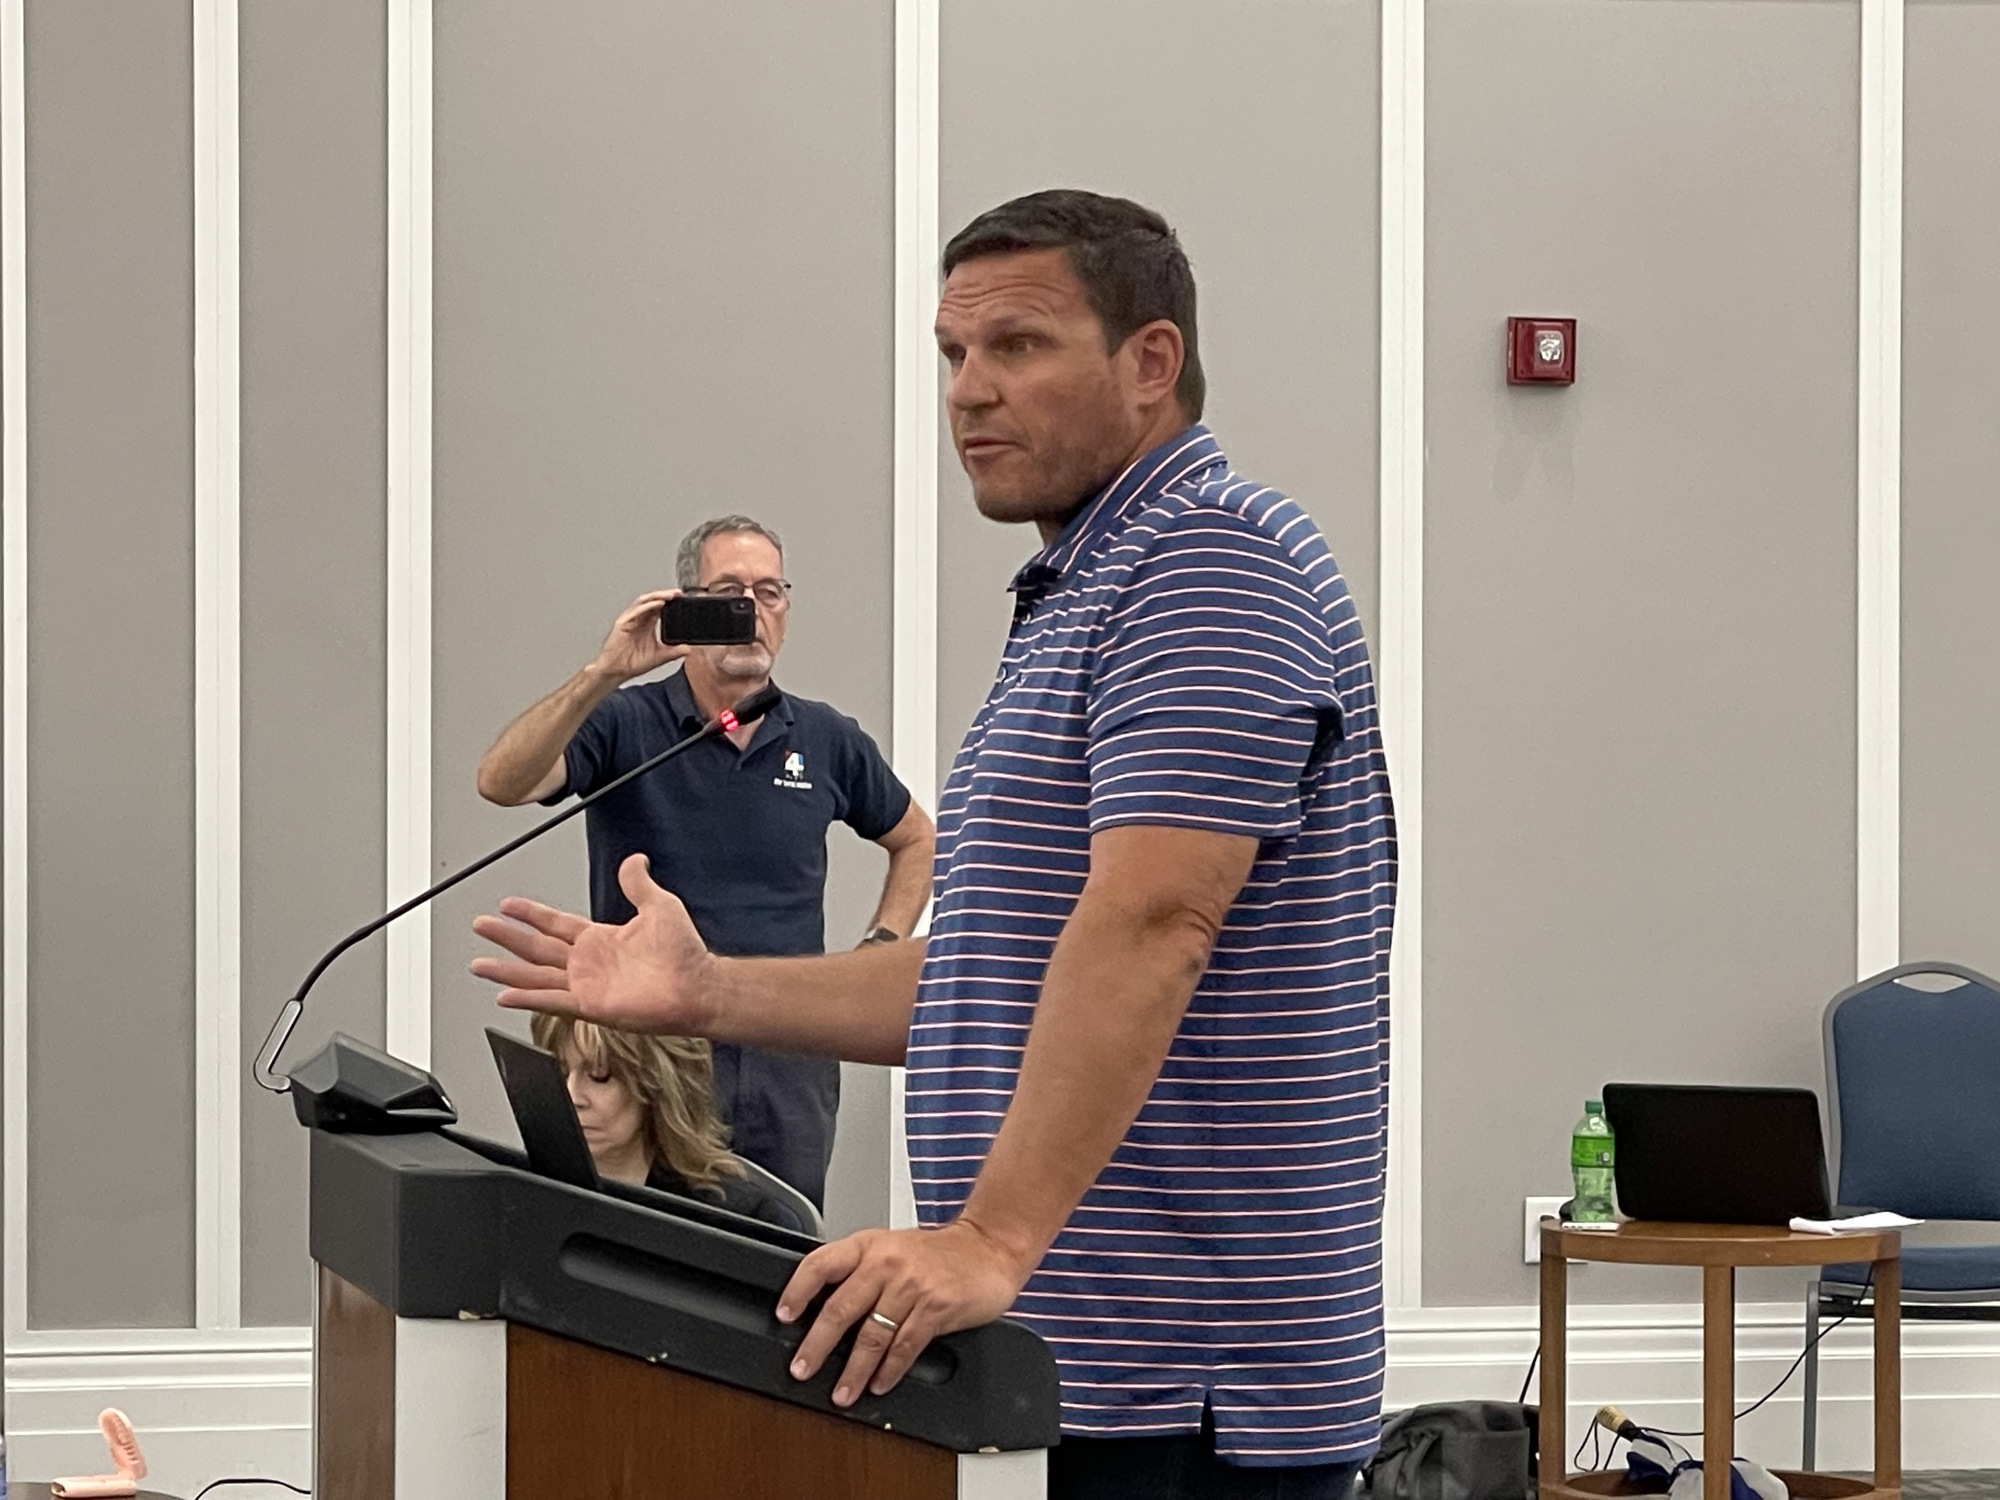 Former Jacksonville Jaguars lineman Tony Boselli spoke in favor of the Shipyards plan at the DIA meeting.